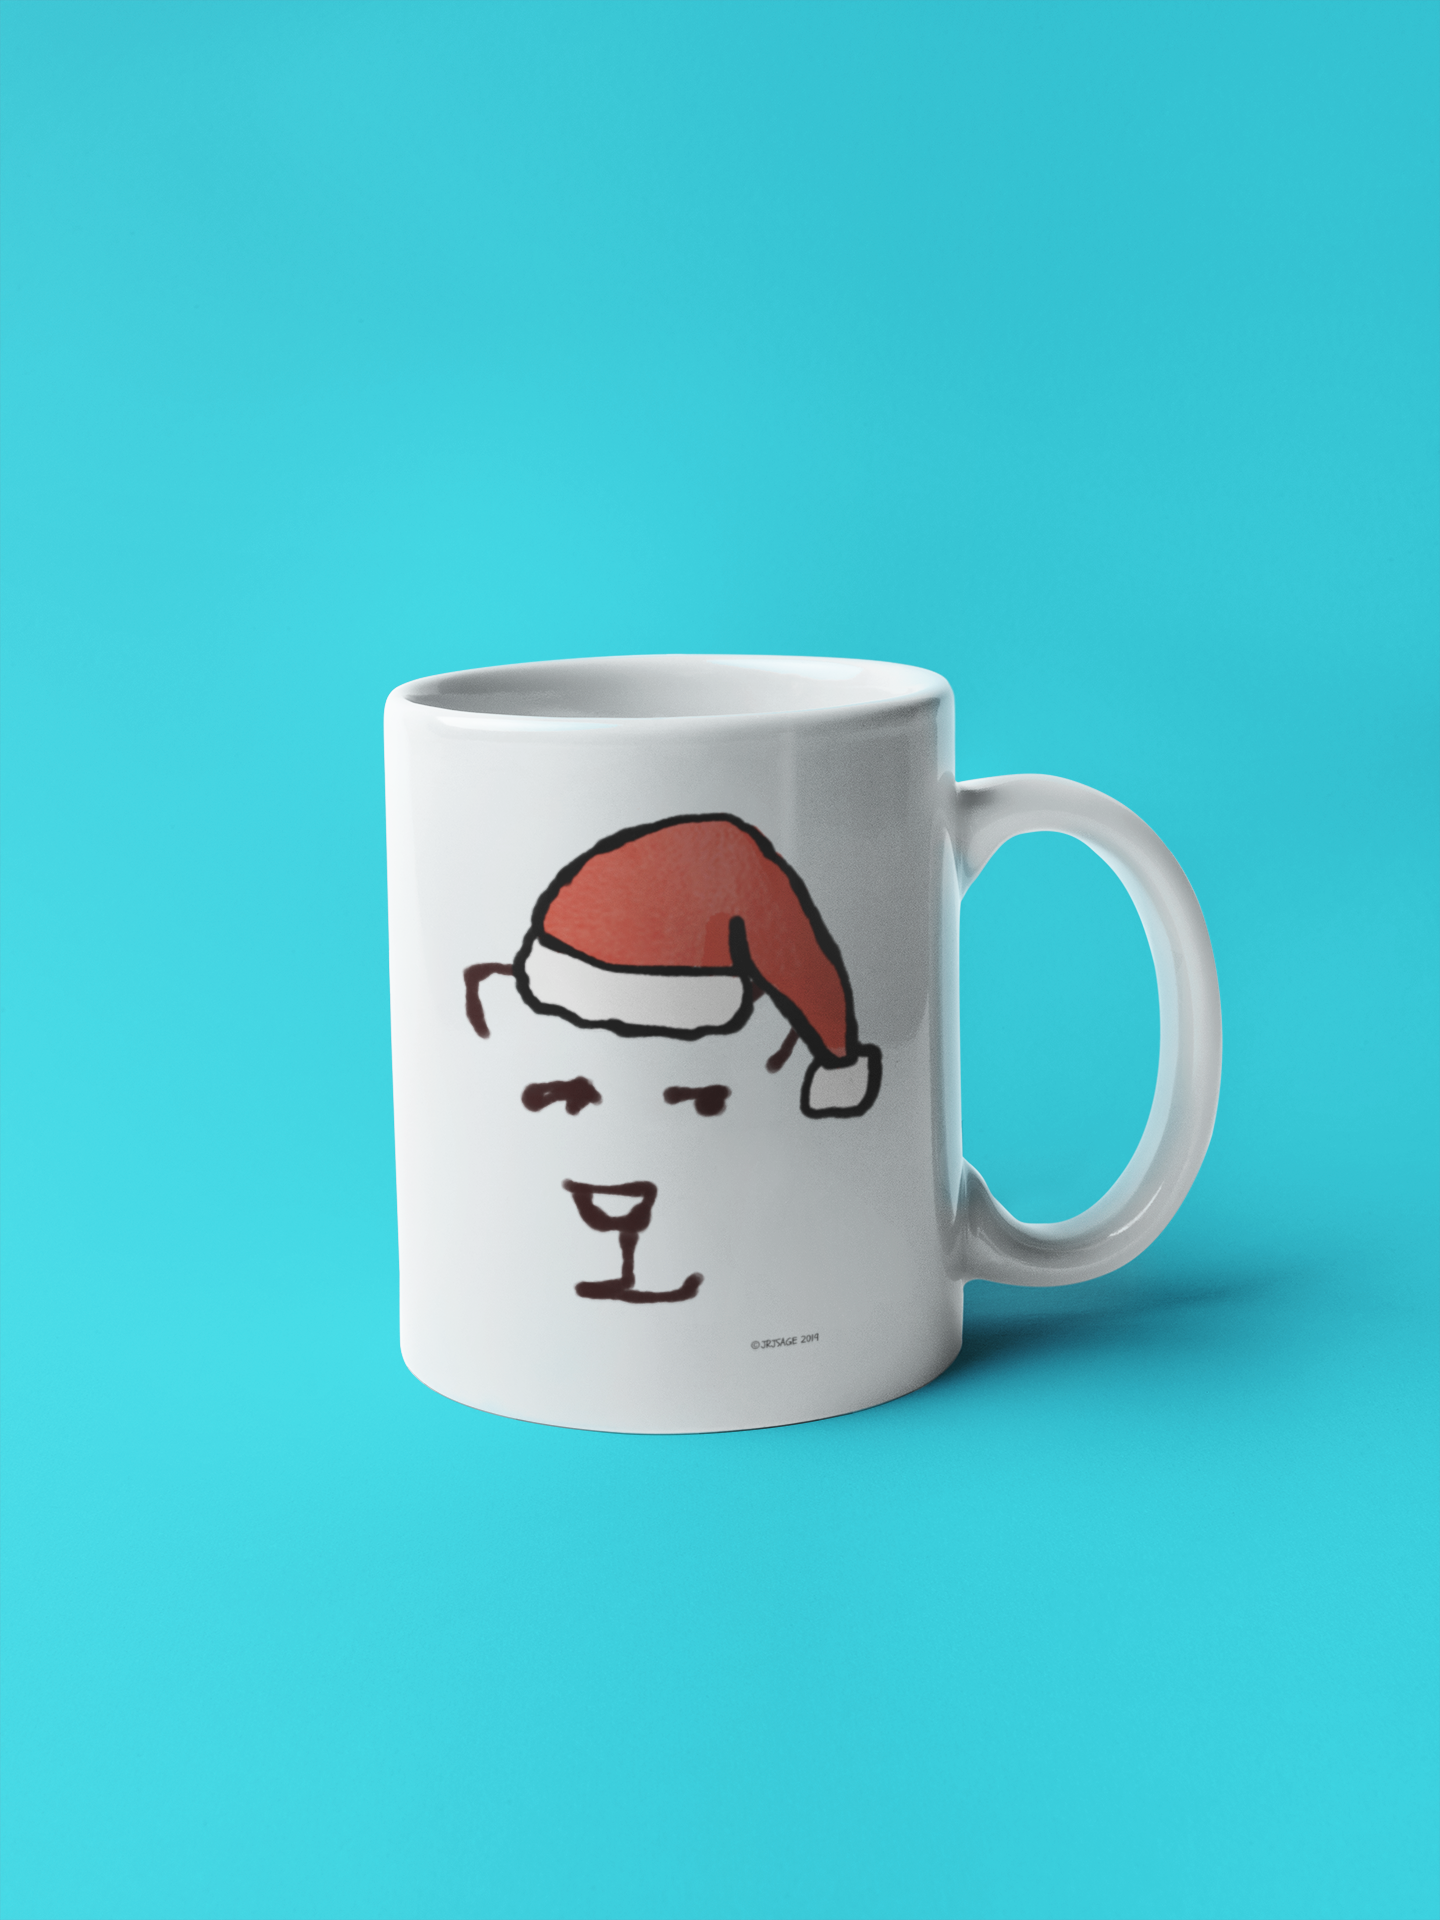 Santa Polar Bear Christmas coffee mug design by Hector and Bone - A cute animal wearing a Santa hat